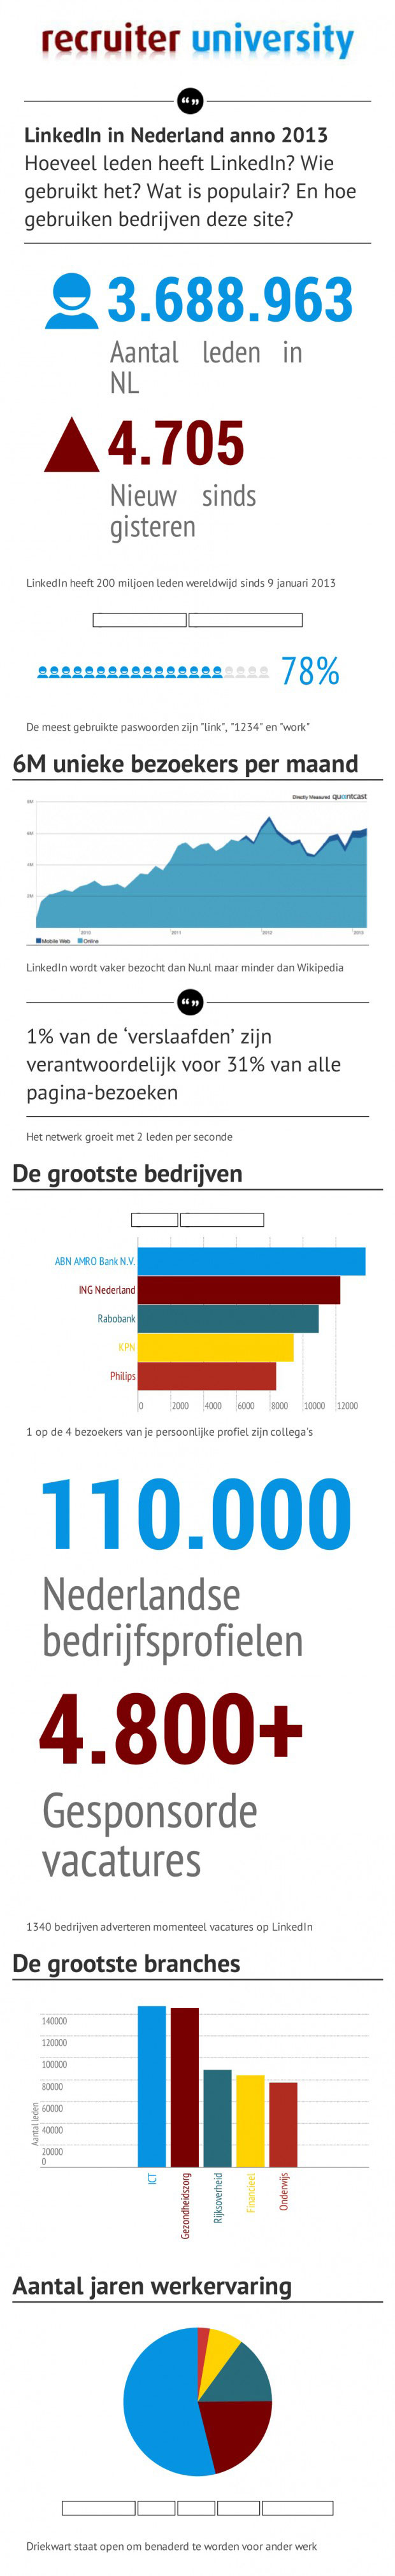 Infographic Linkedin in Nederland de cijfers 